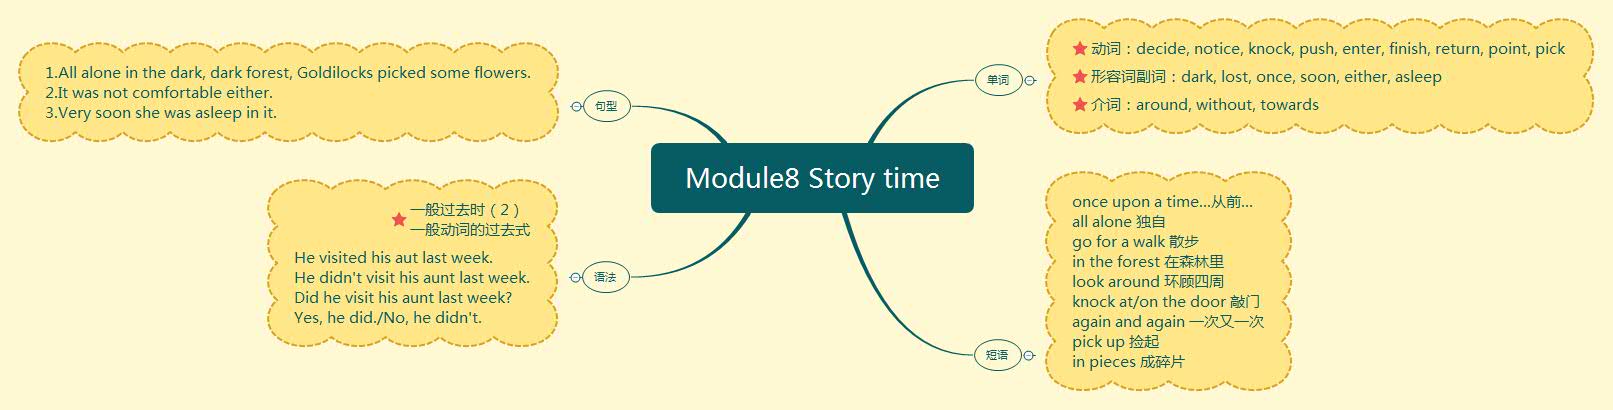 Module8 Story time.jpg